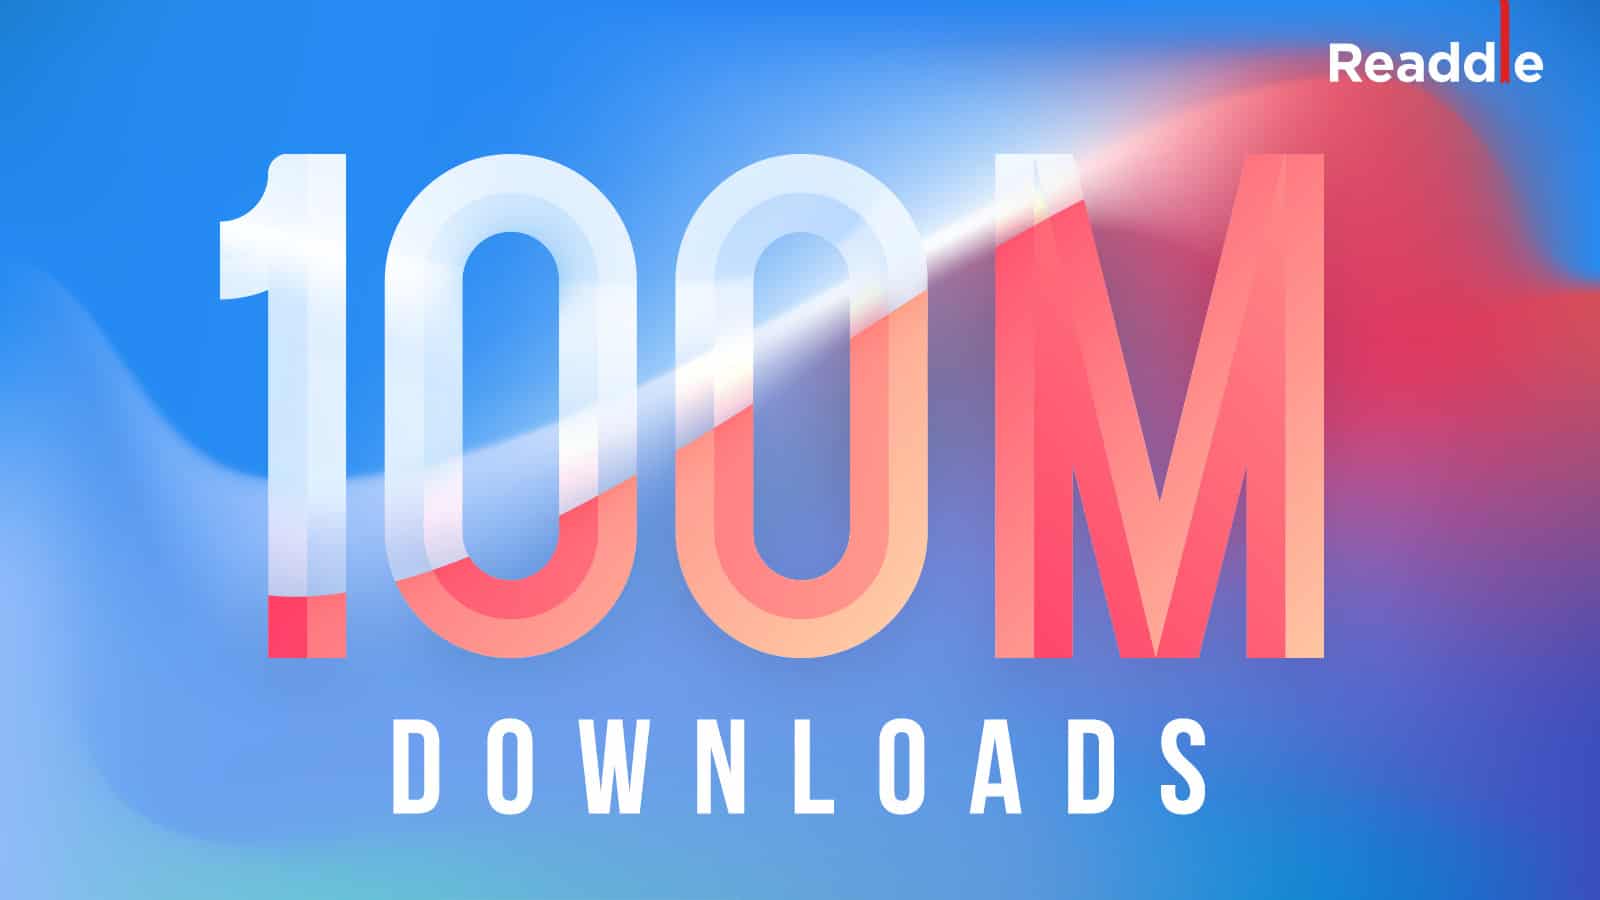 Readdle 100 million downloads